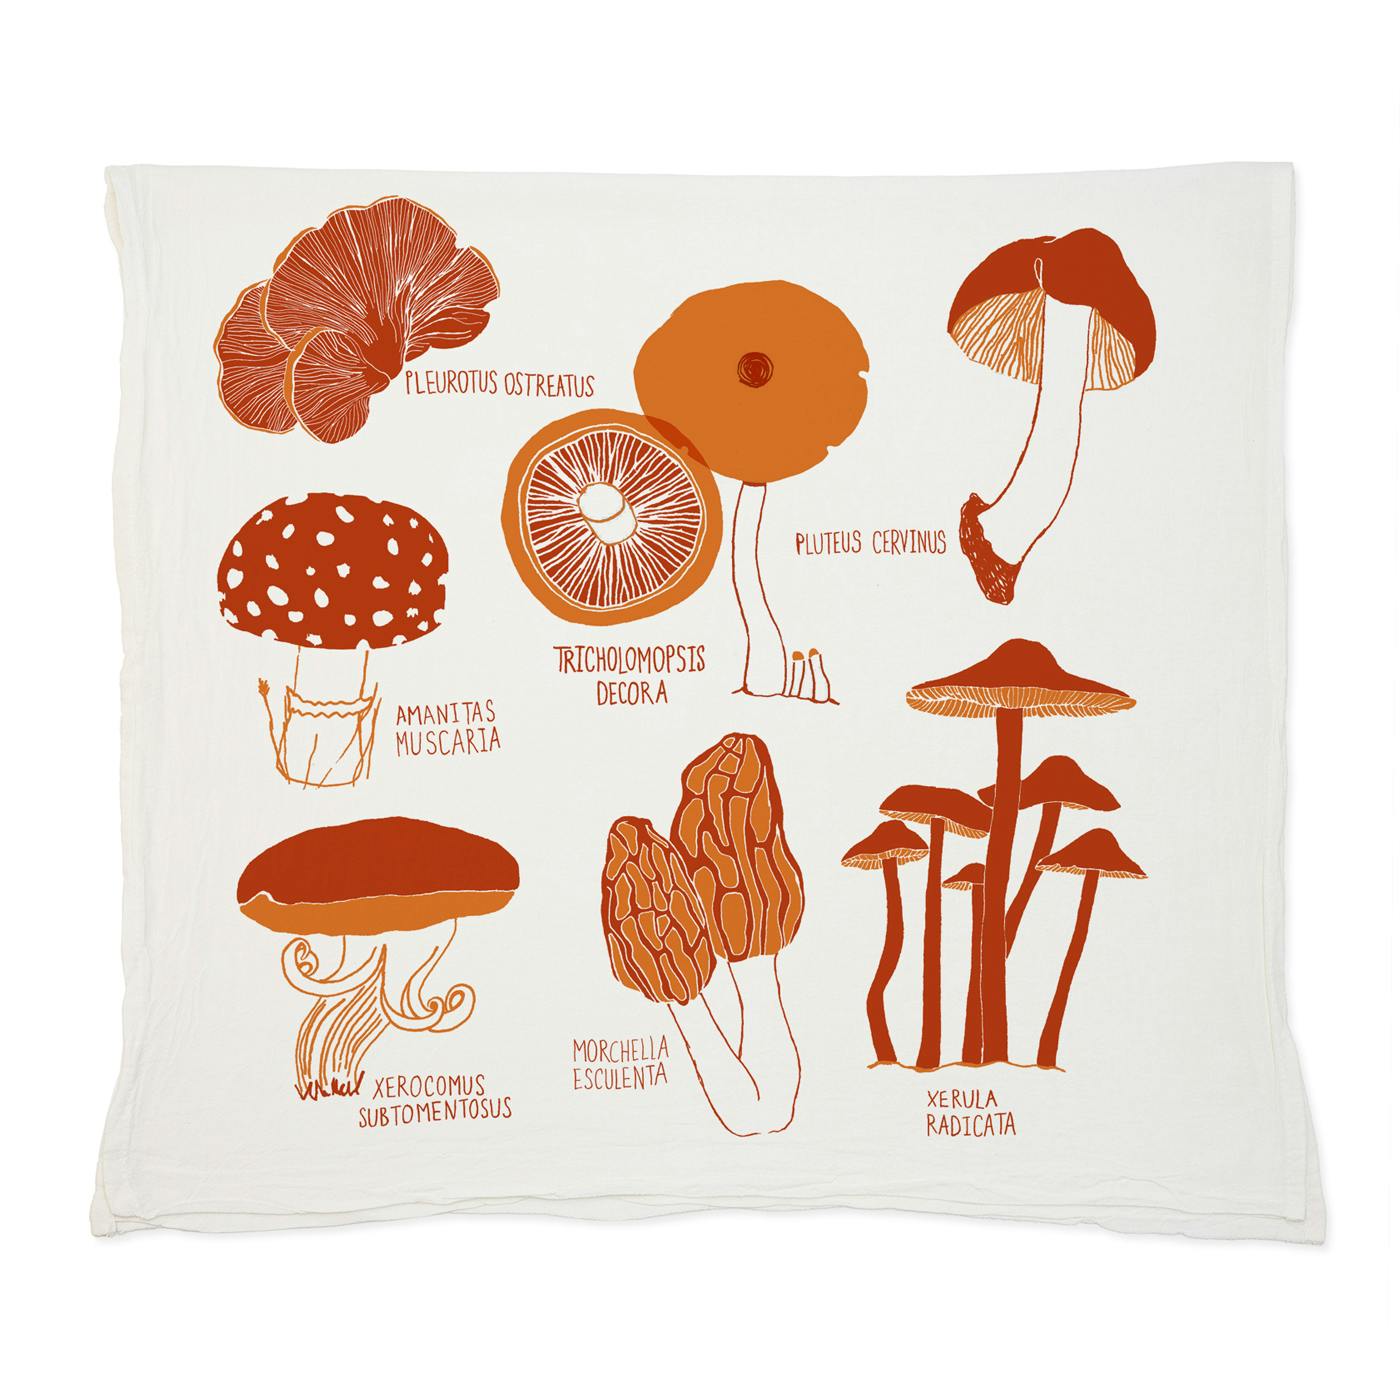 Antimicrobial Towel (Check Mushroom), All-Clad